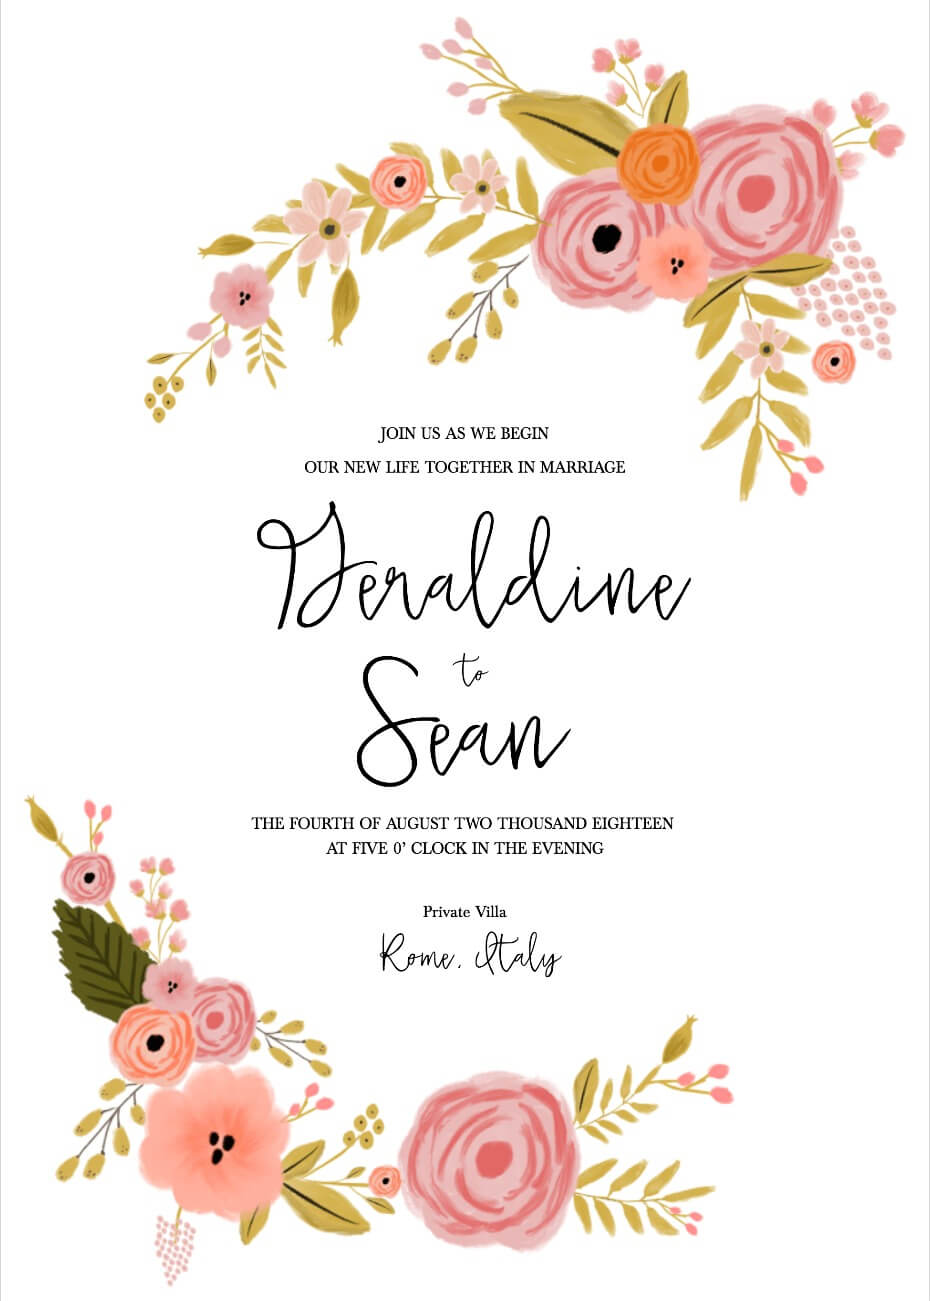 Free Printable Wedding Invitation